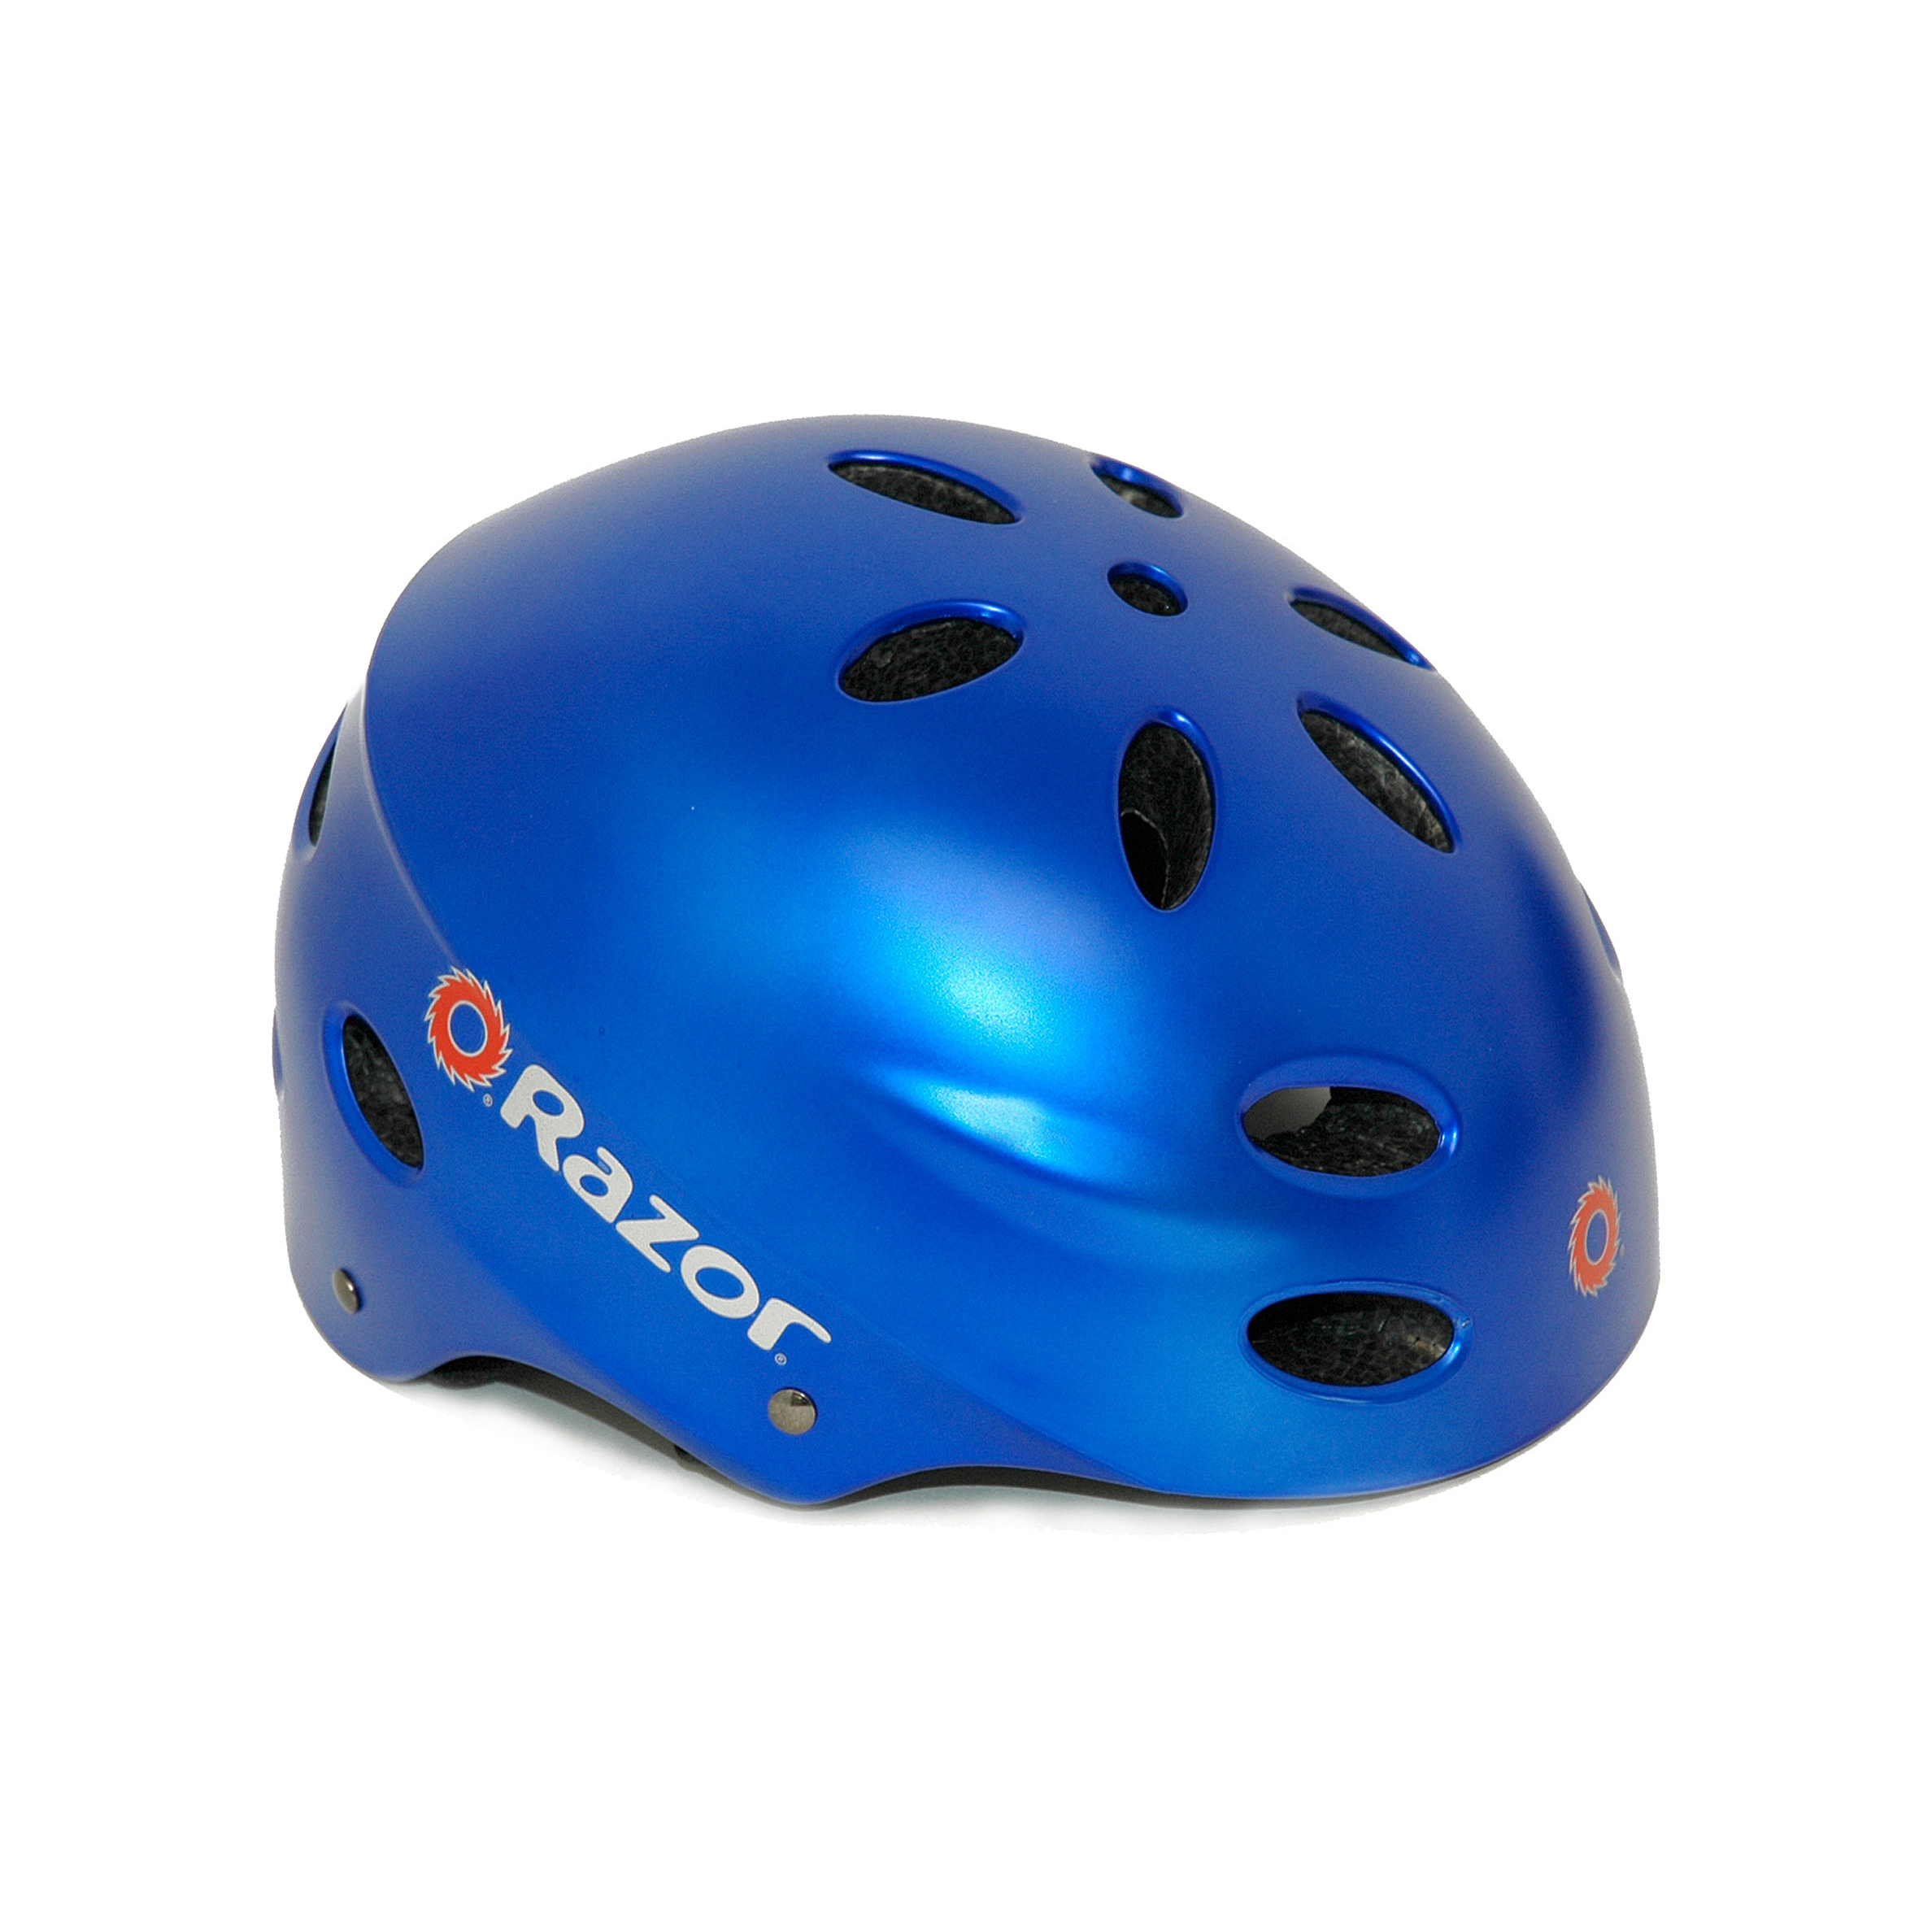 Razor V17 Multi-Sport Youth Helmet, Blue - image 4 of 5